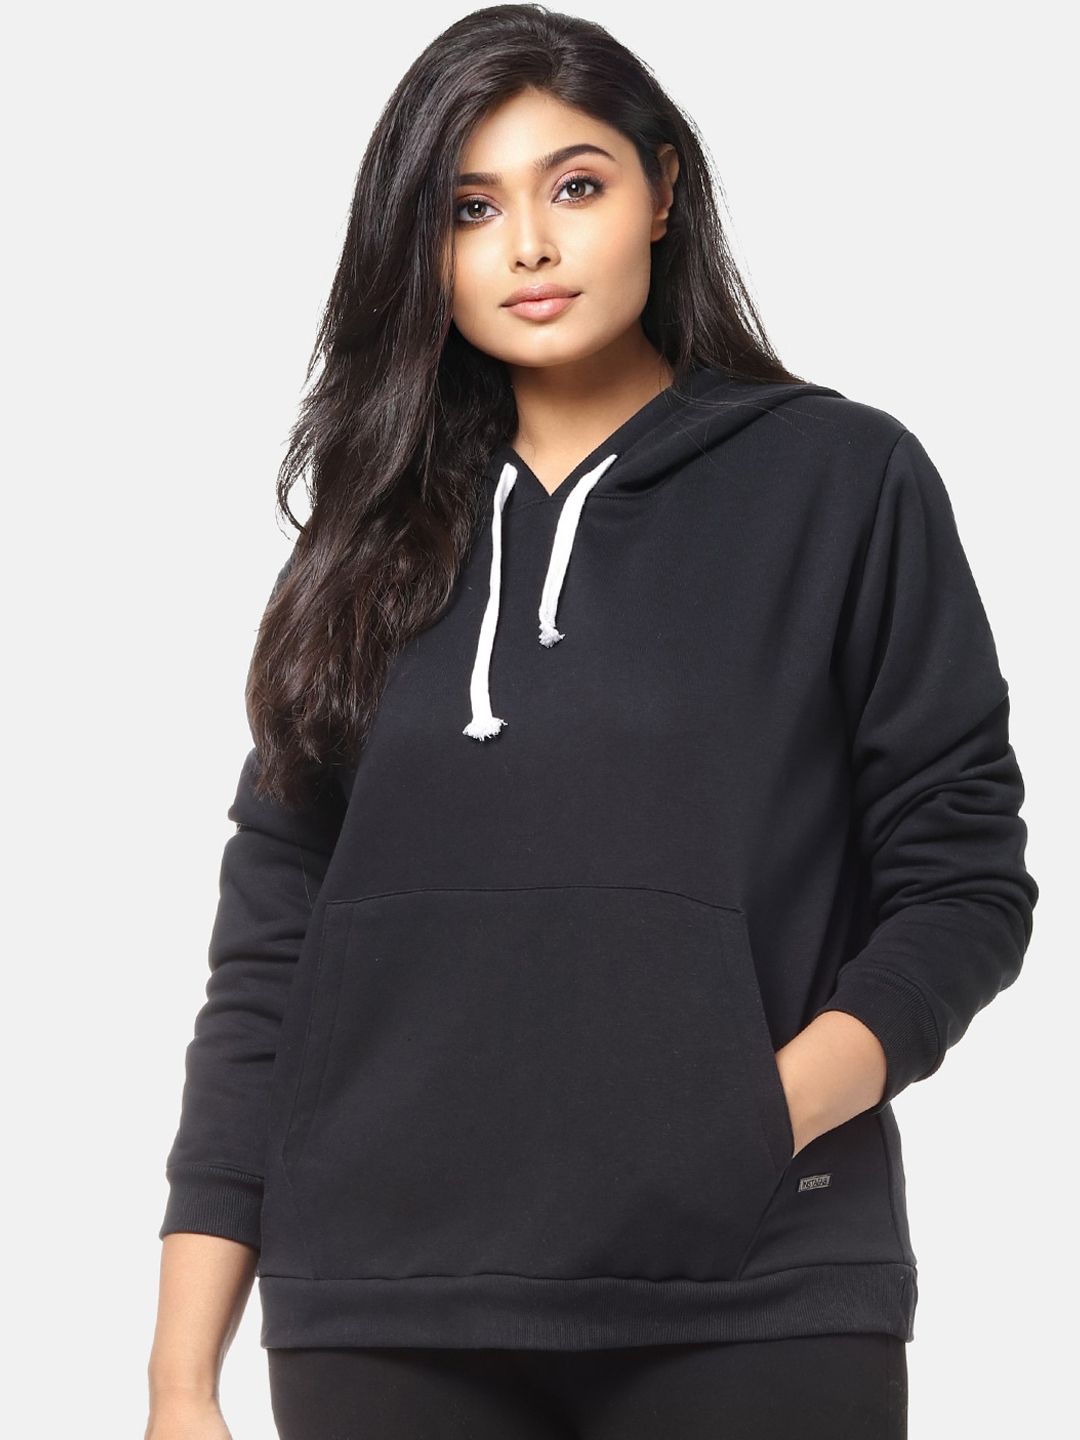 Instafab Plus Women Black Solid Hooded Pullover Sweatshirt Price in India